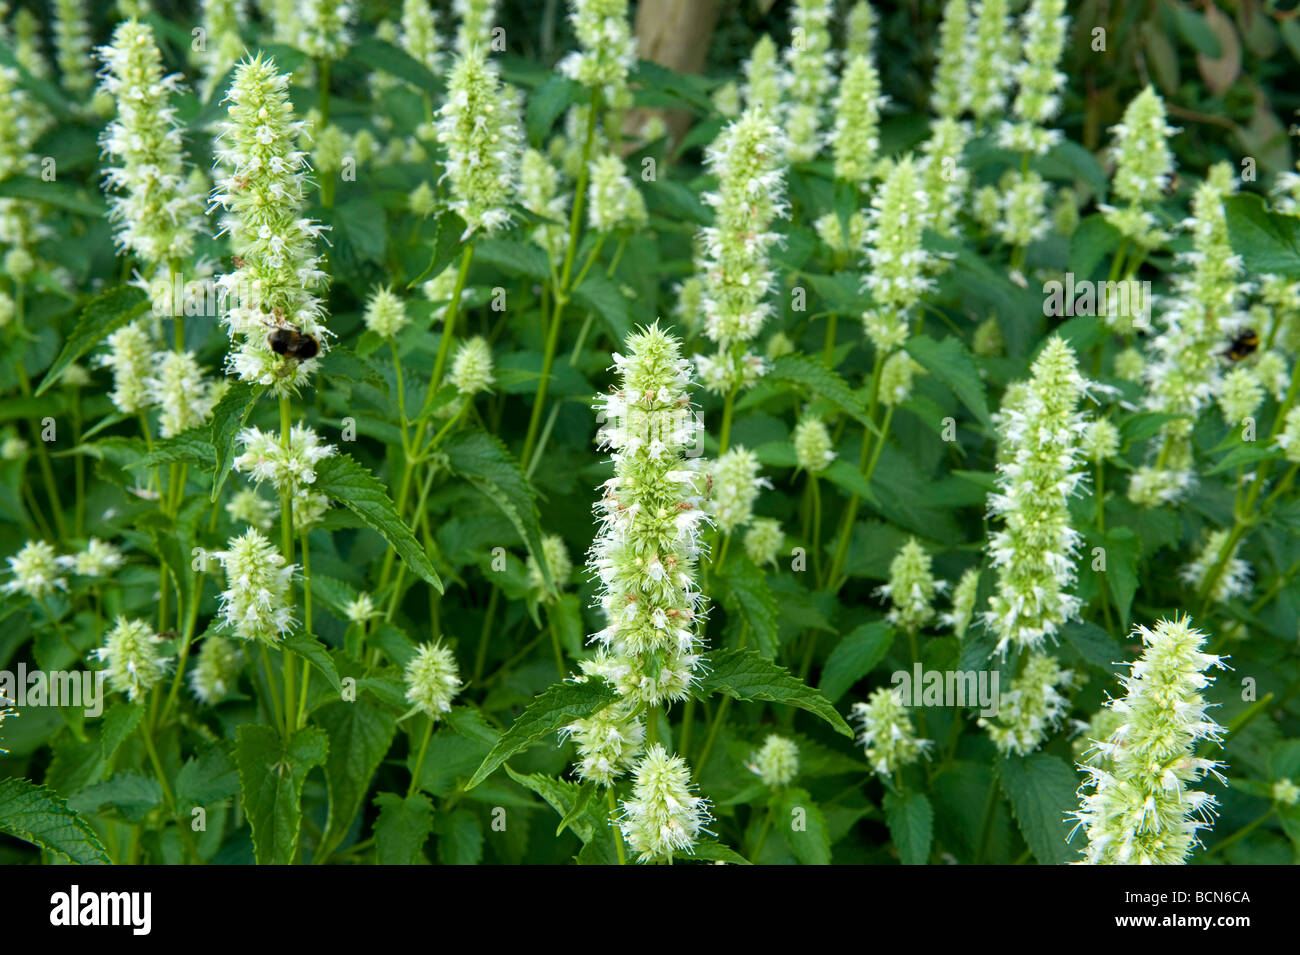 Sanguisorba Burnet Rosaceae Tenuifolia 'Alba'. Abundance of white spiky flowers. Stock Photo